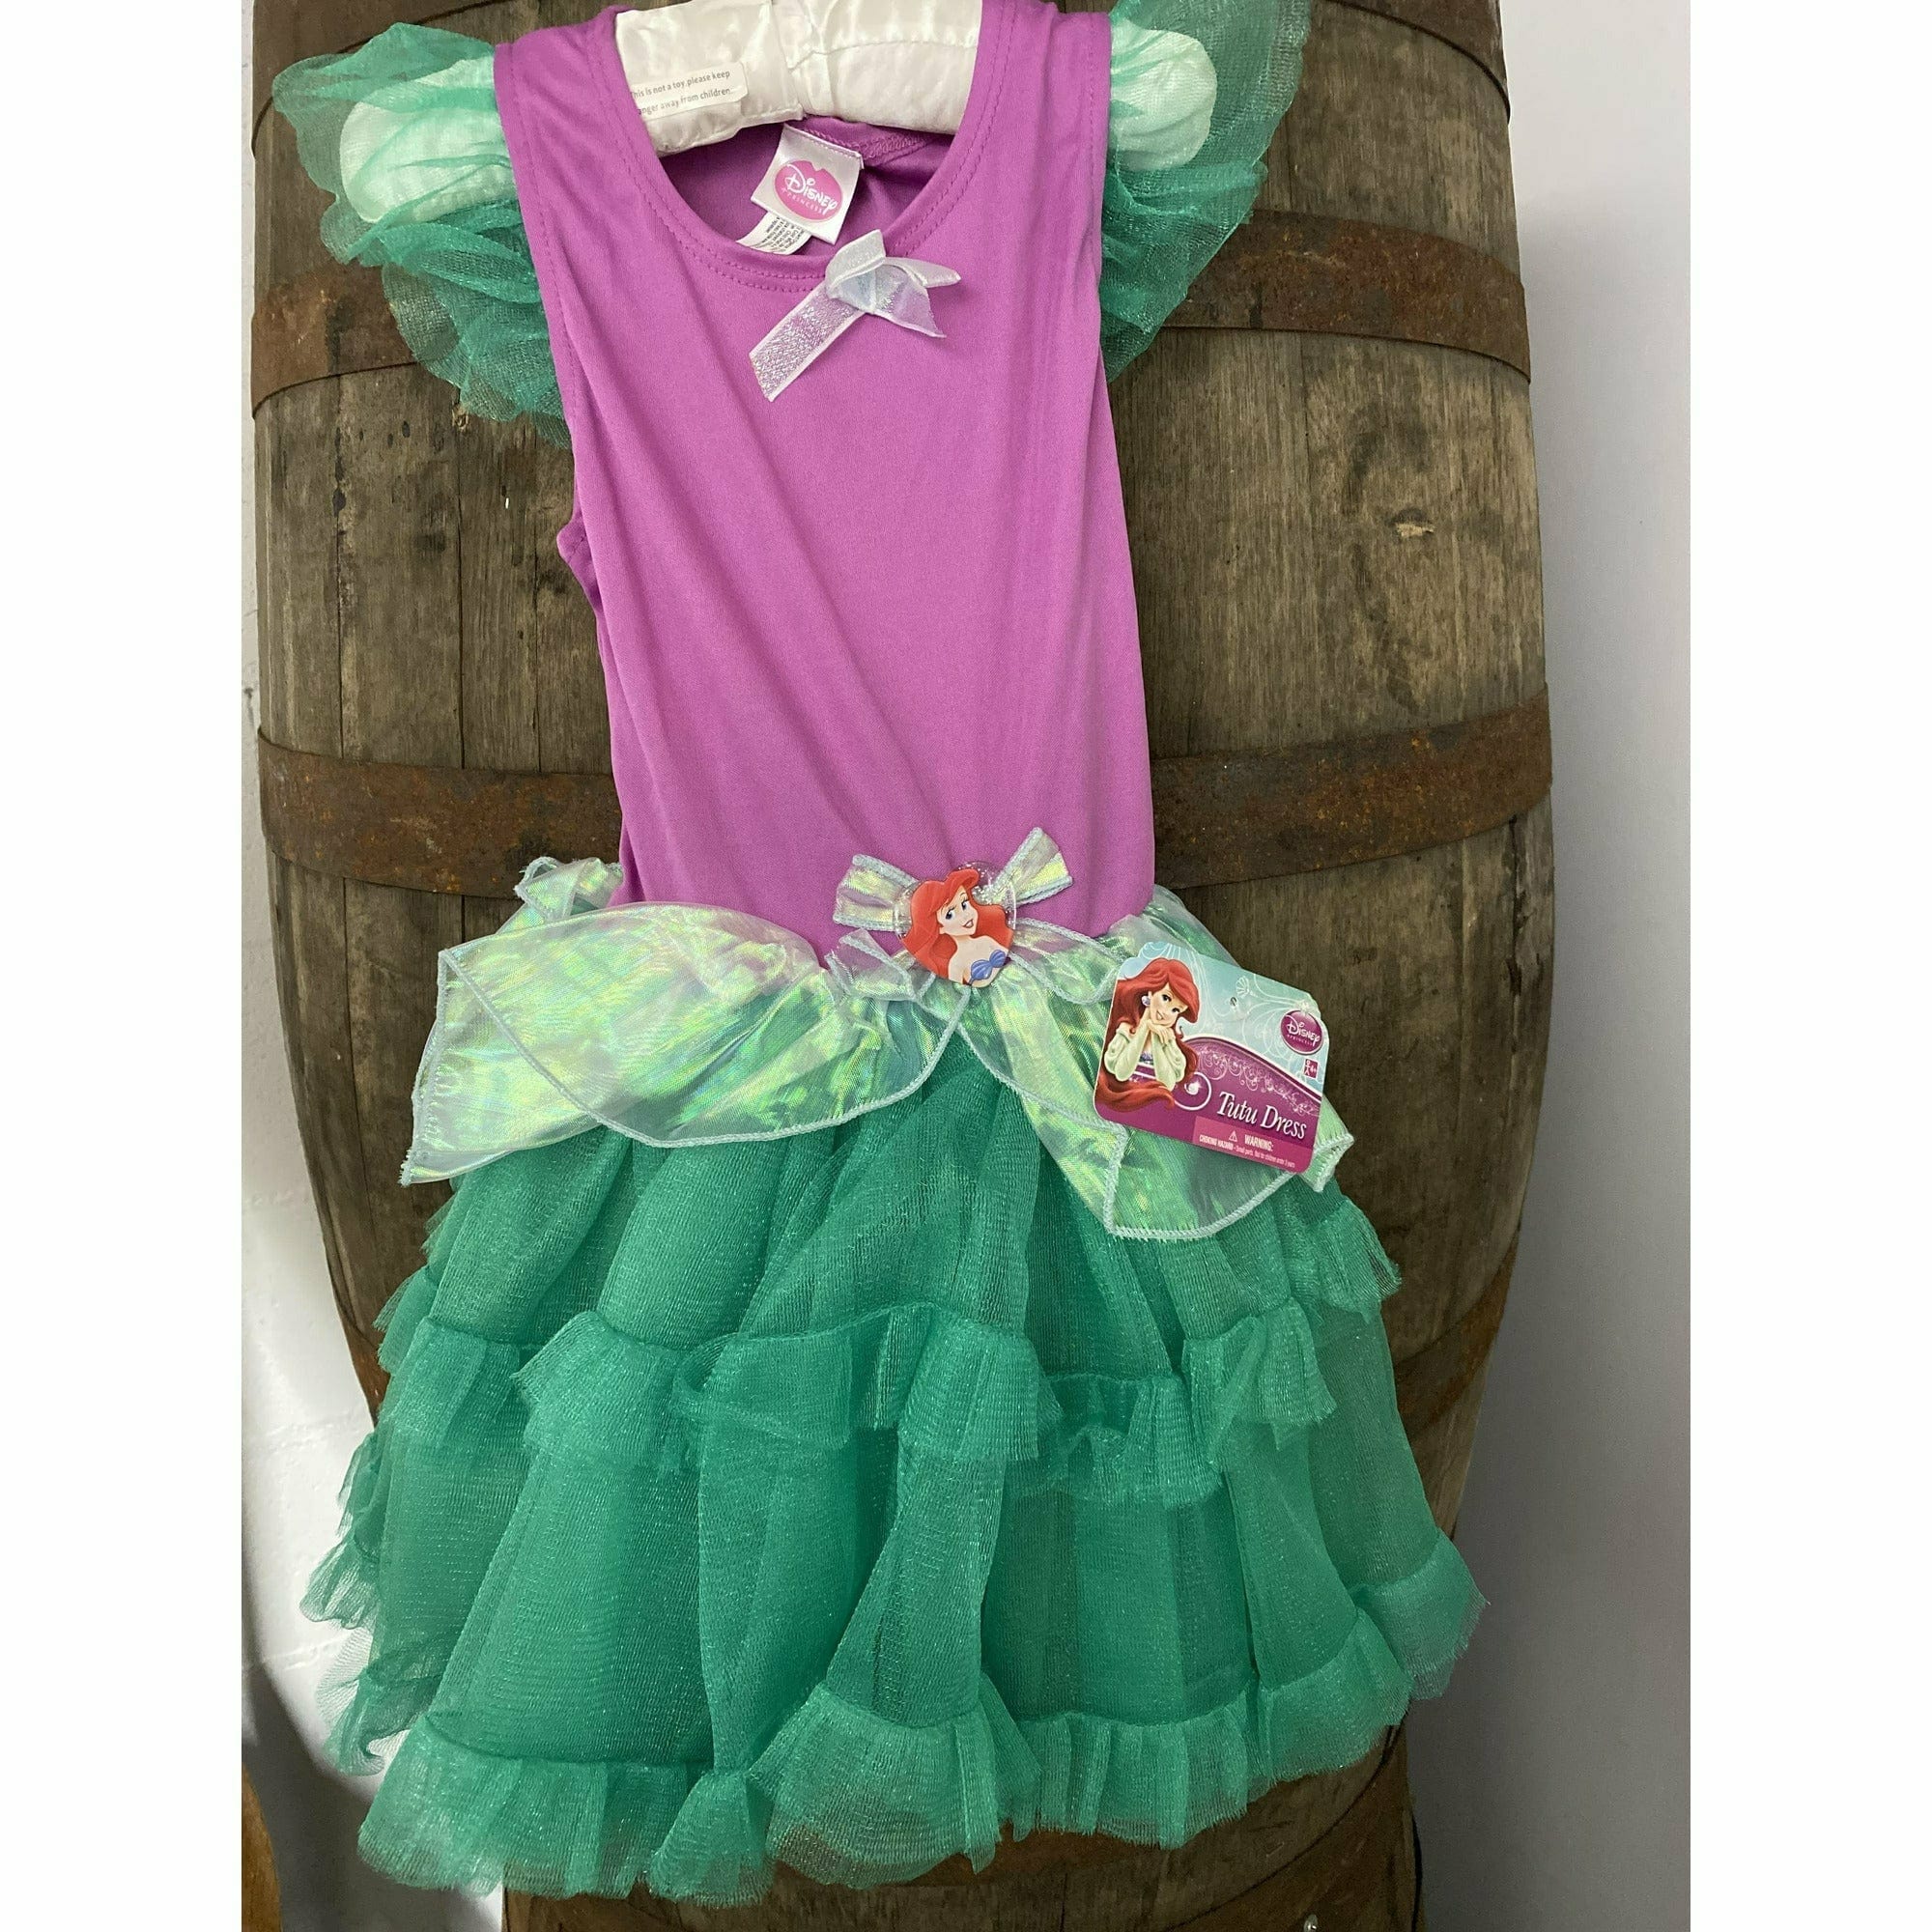 Amscan The Little Mermaid Tutu Dress, Small 4-6